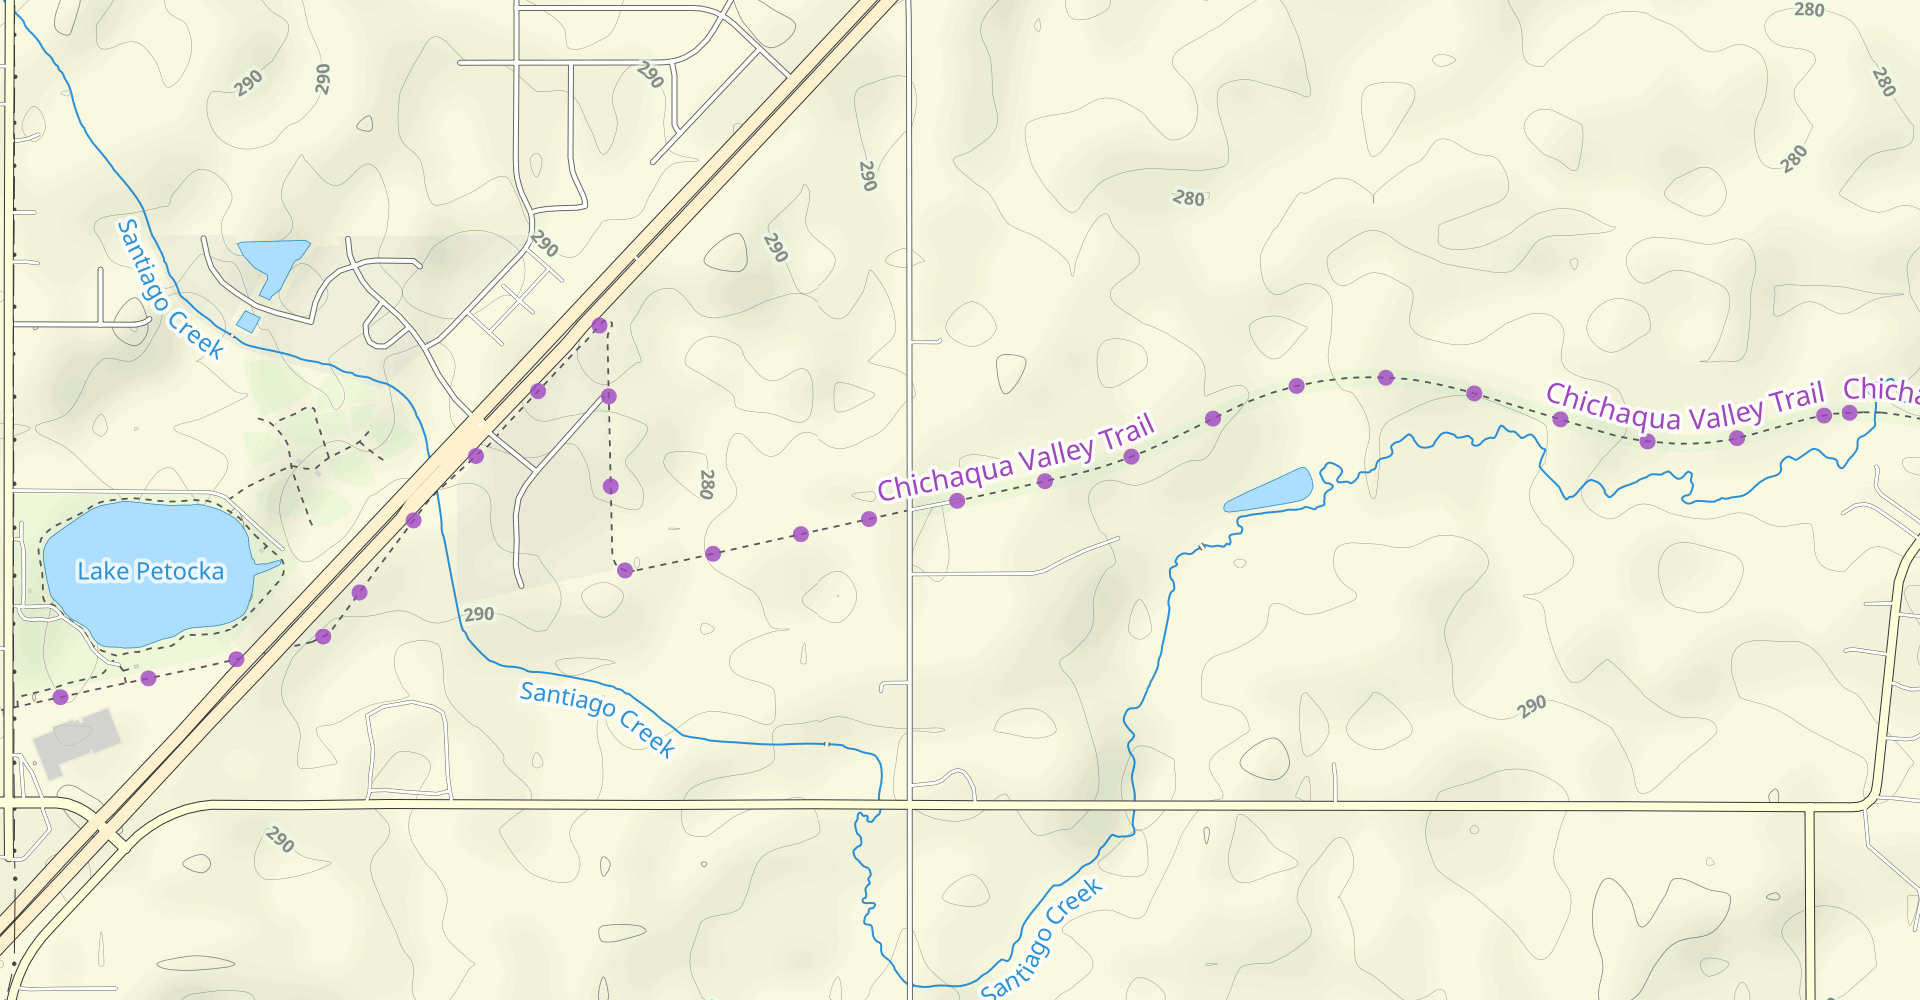 Hike Chichaqua Valley Trail